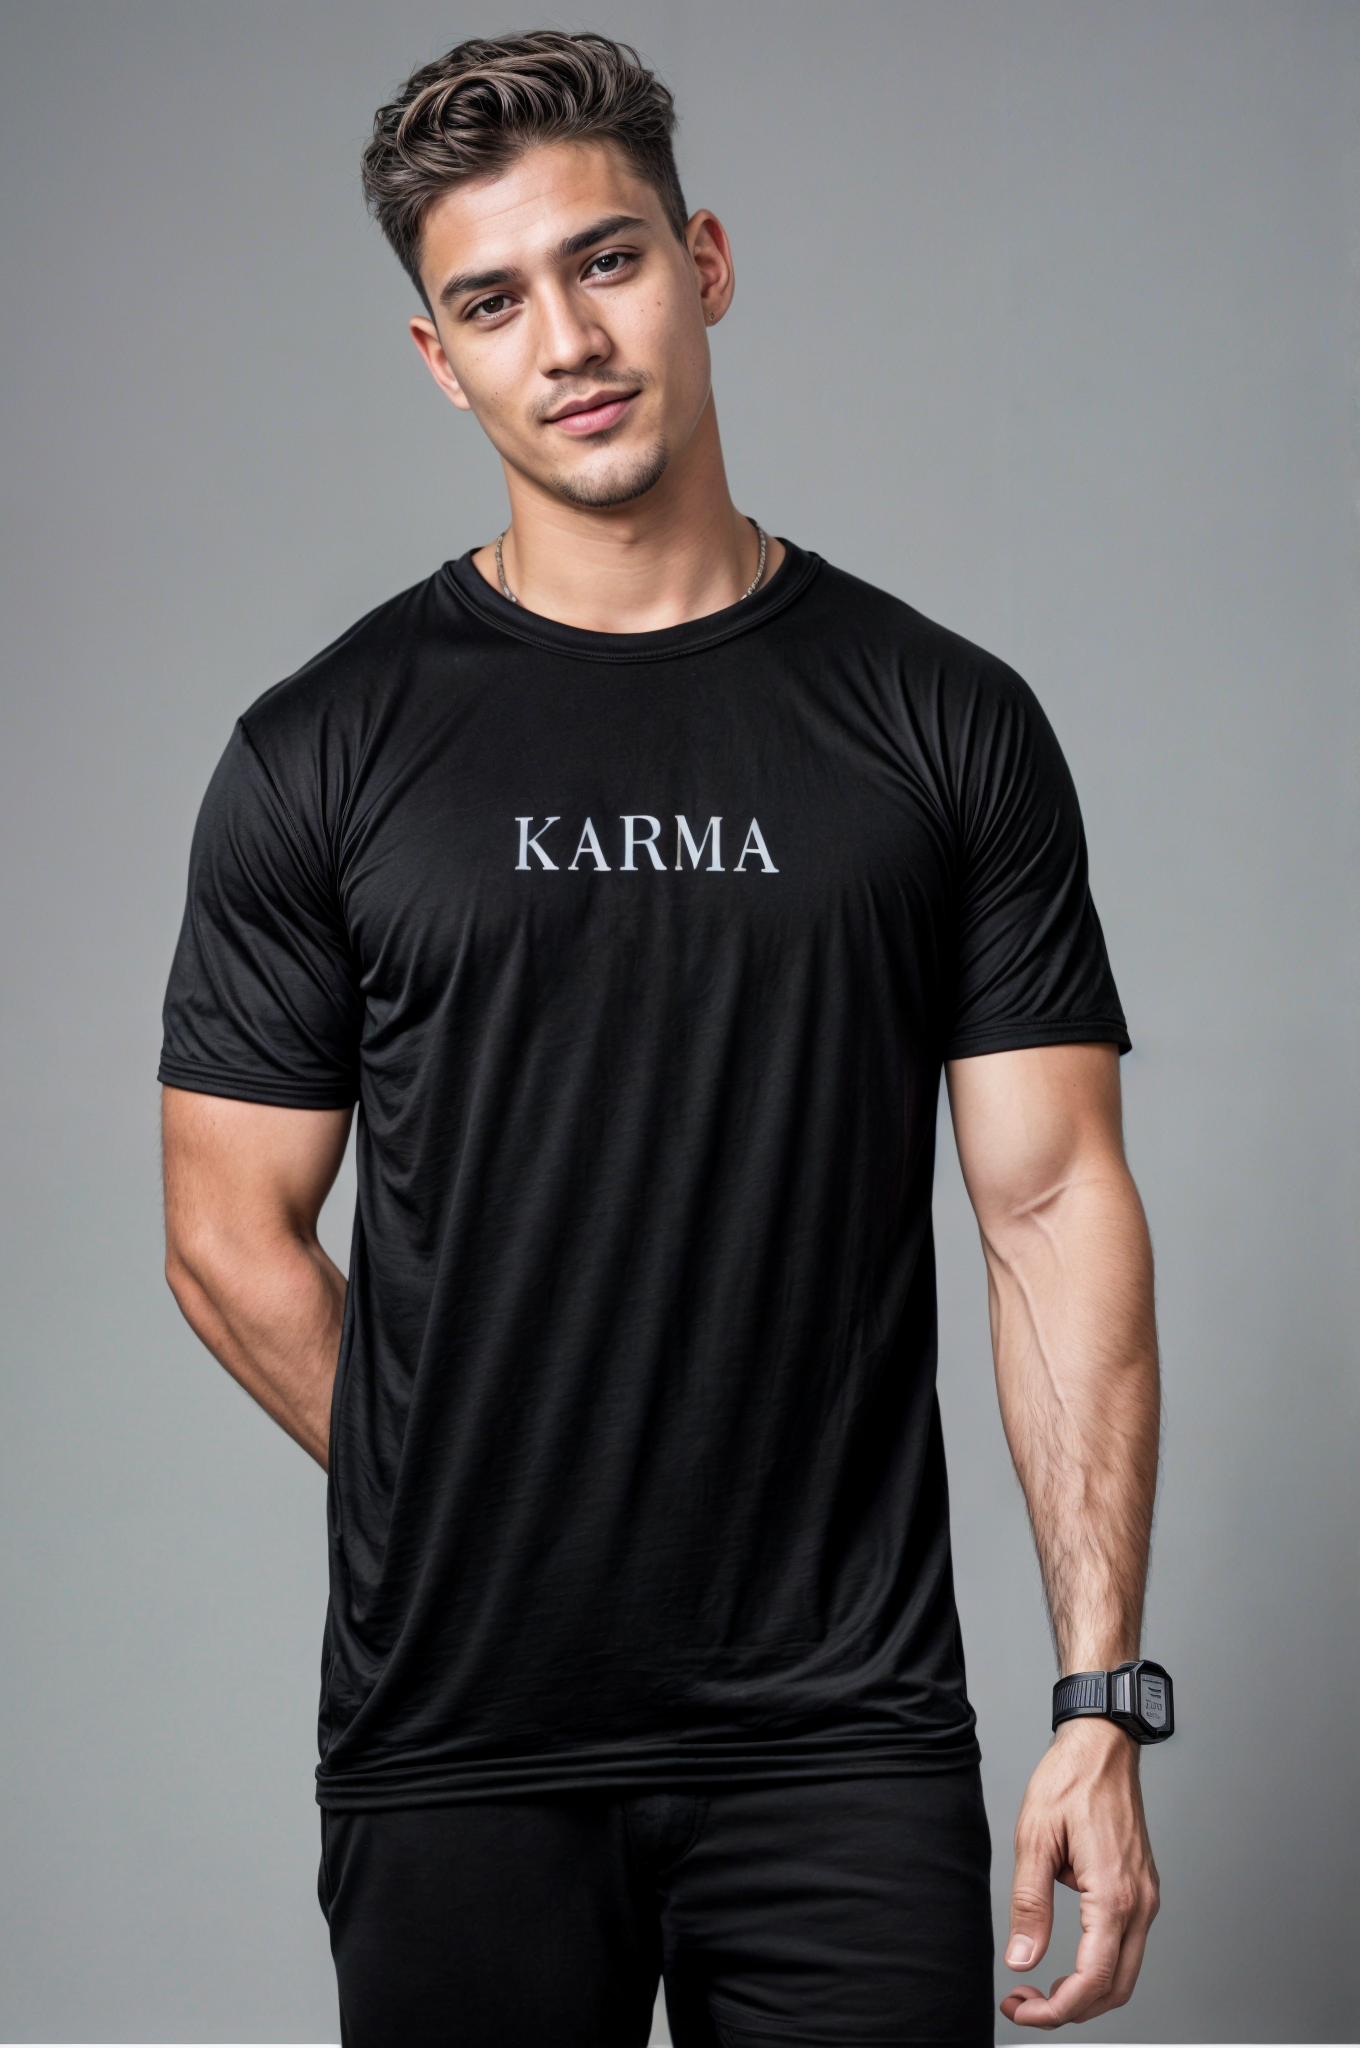 Ultra Soft Comfy Fit Black T-shirt